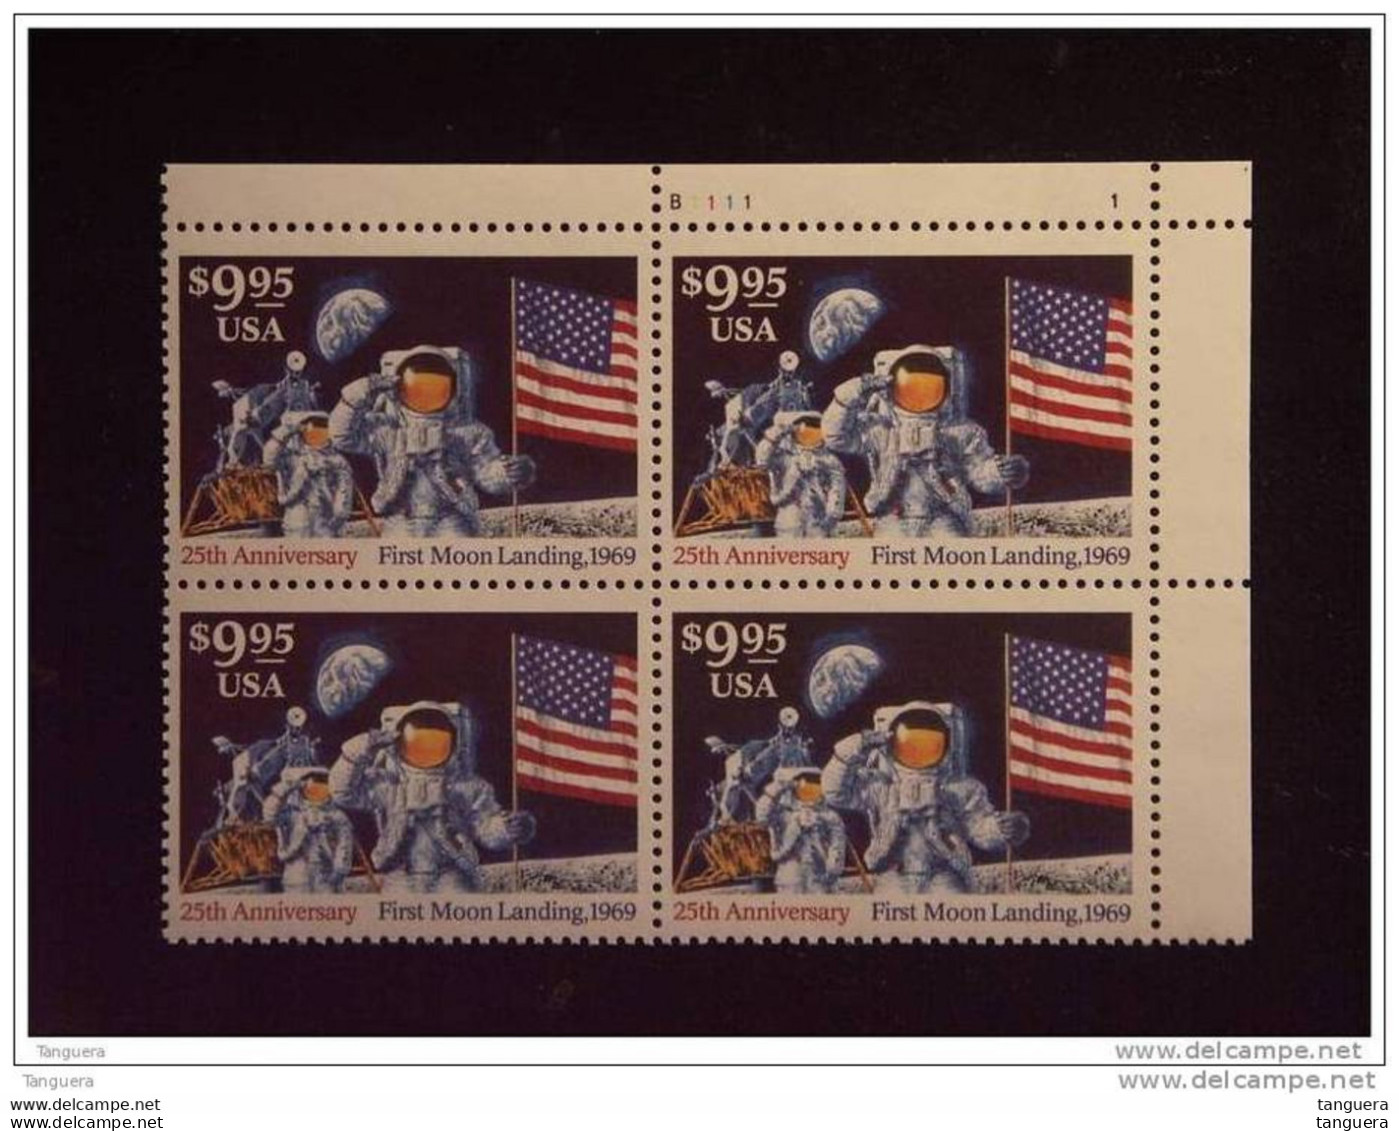 USA Etats-Unis D'Amerique United States 1994 Moon Landing Bloc Of 4 X Yv 2259 MNH ** Plate N° B1111 - Plattennummern